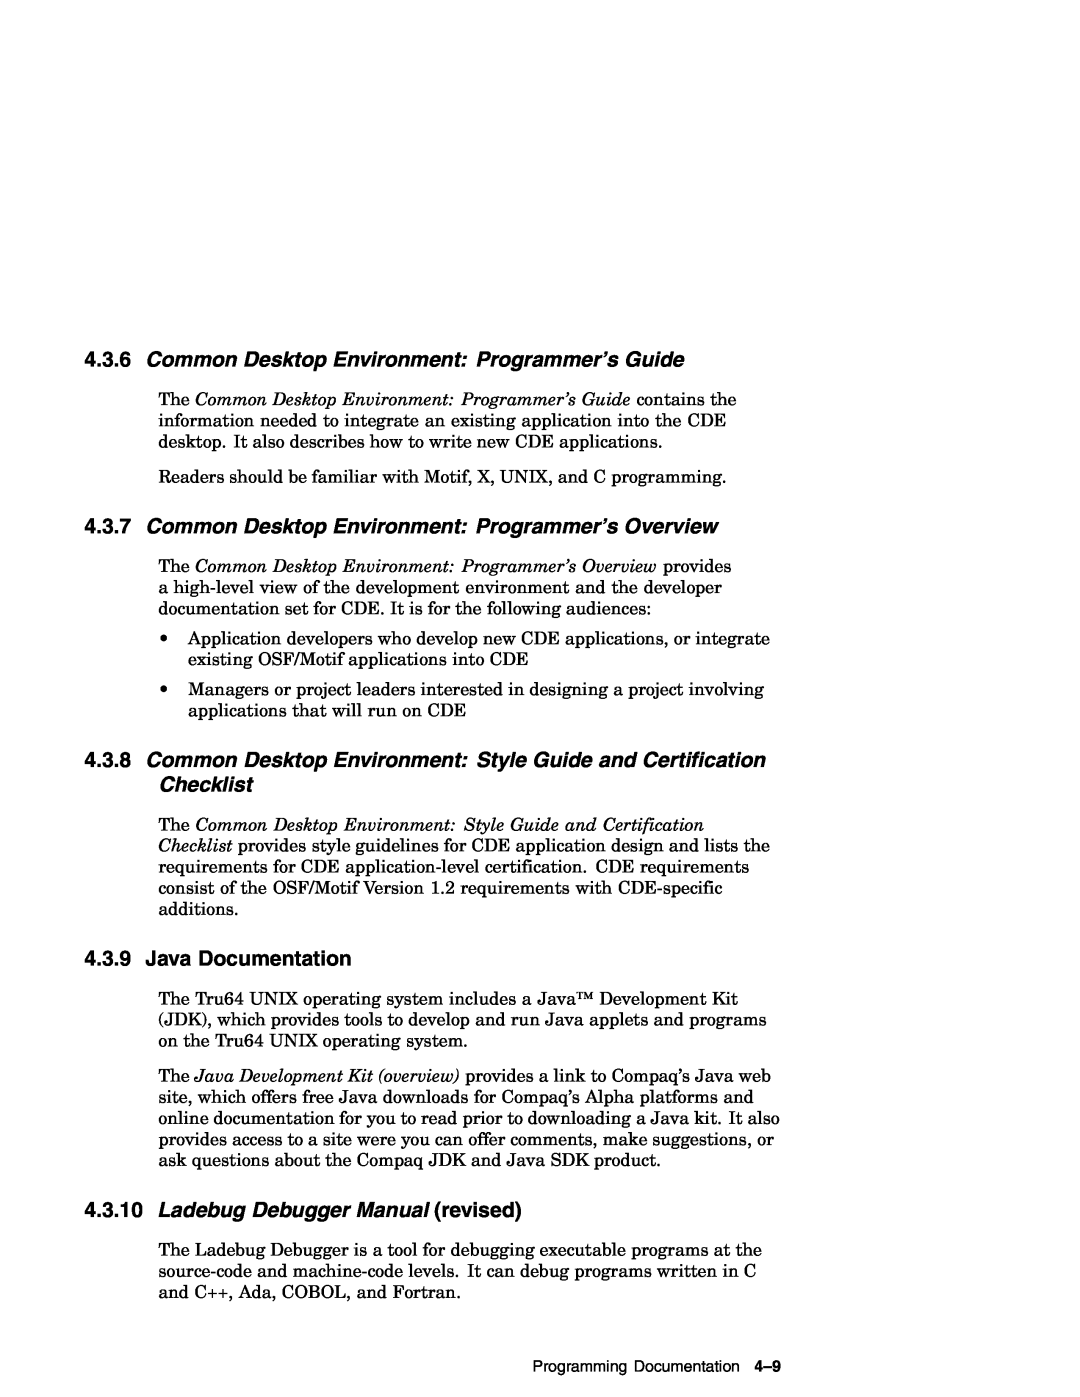 Compaq AA-RH8RD-TE manual Common Desktop Environment Programmer’s Guide, Common Desktop Environment Programmer’s Overview 